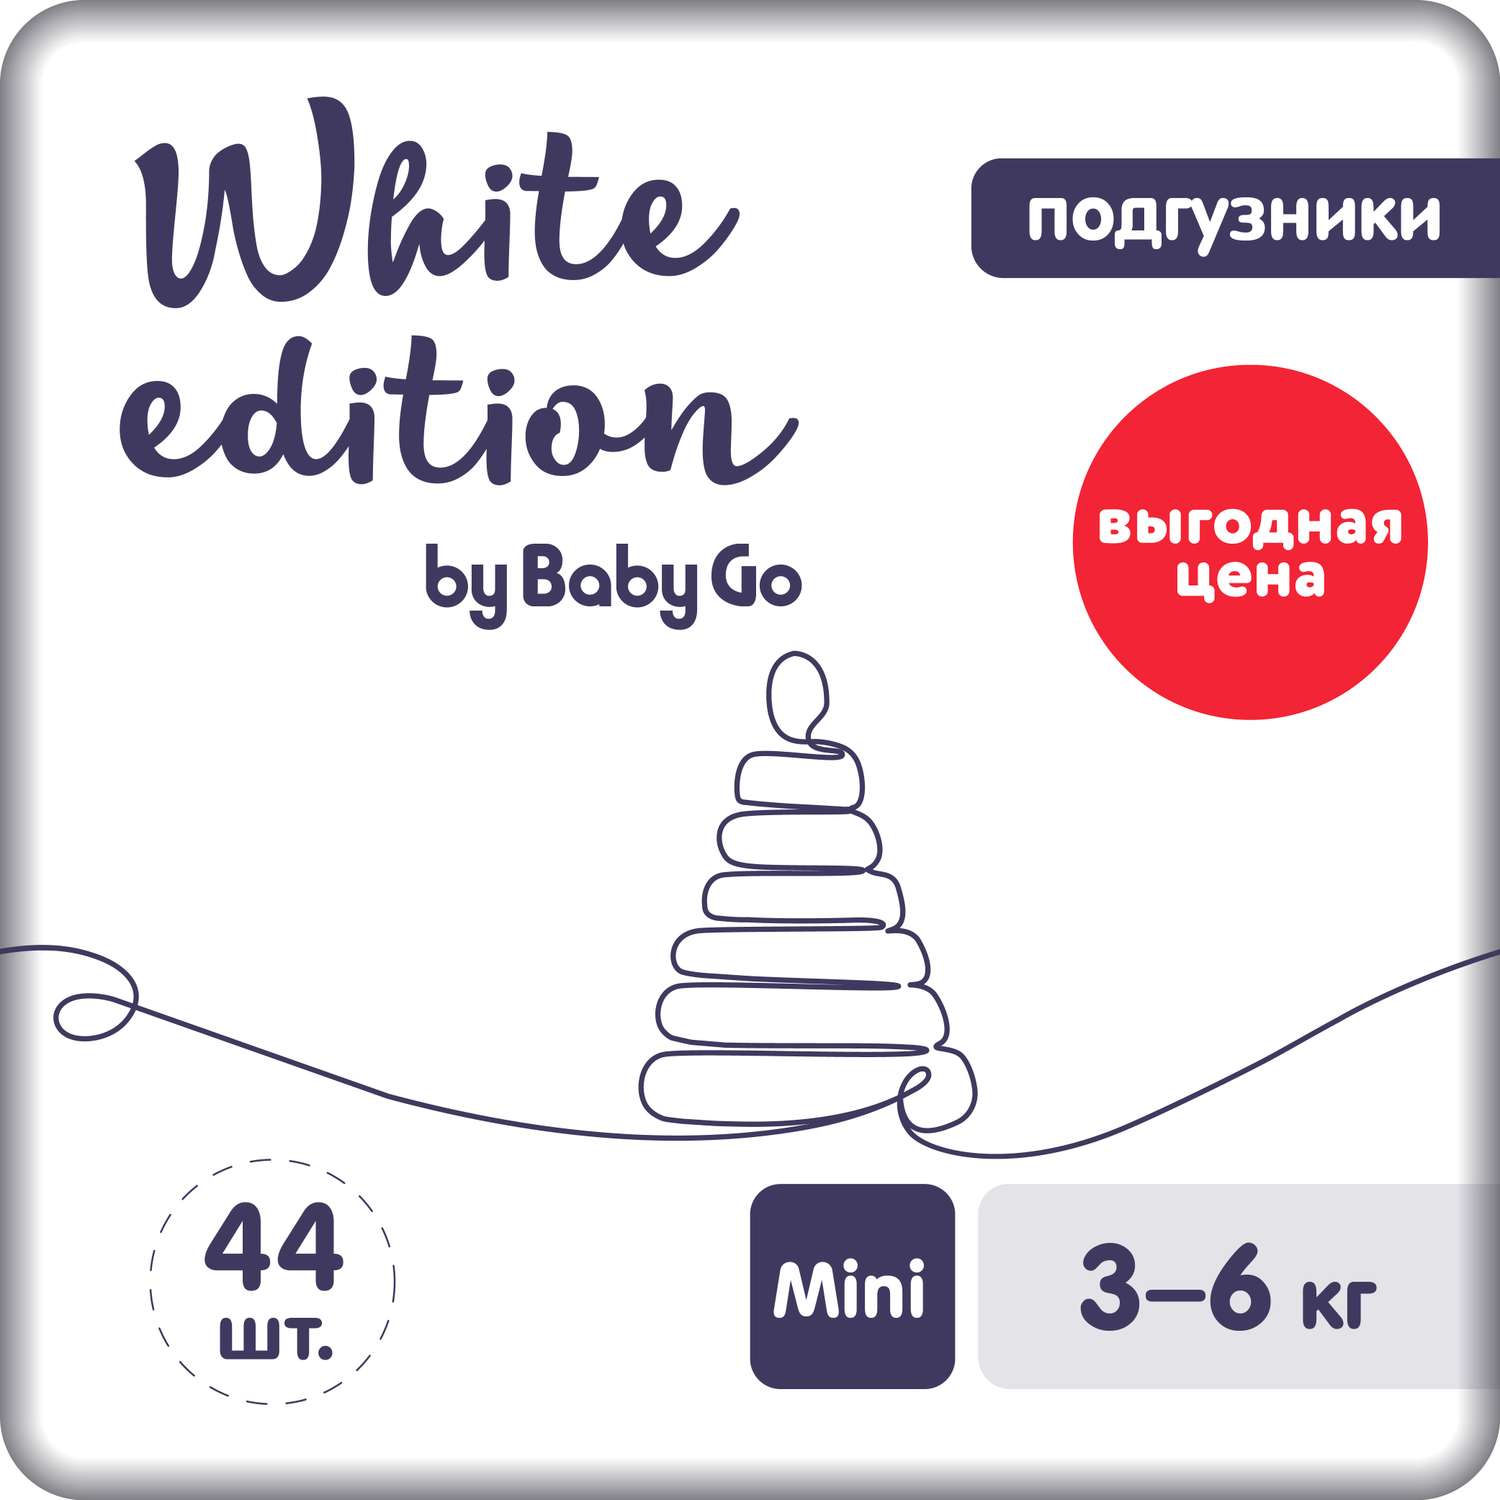 Подгузники White Edition Mini 3-6кг 44шт - фото 1